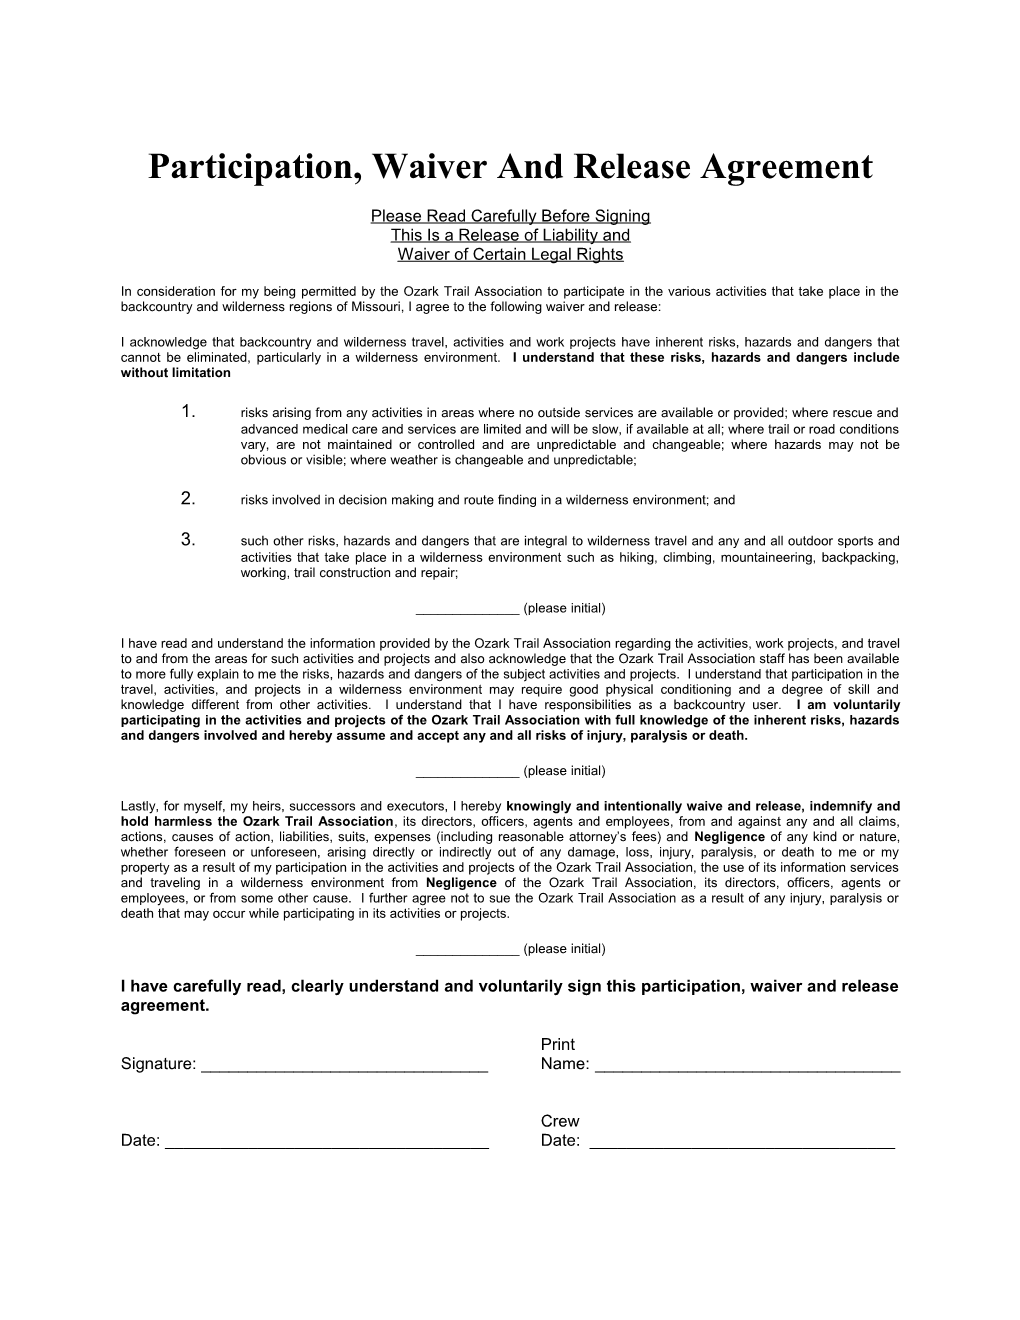 Ozark Trail Participation, Waiver & Release Agreement (T: Jsharp S0941765;1)